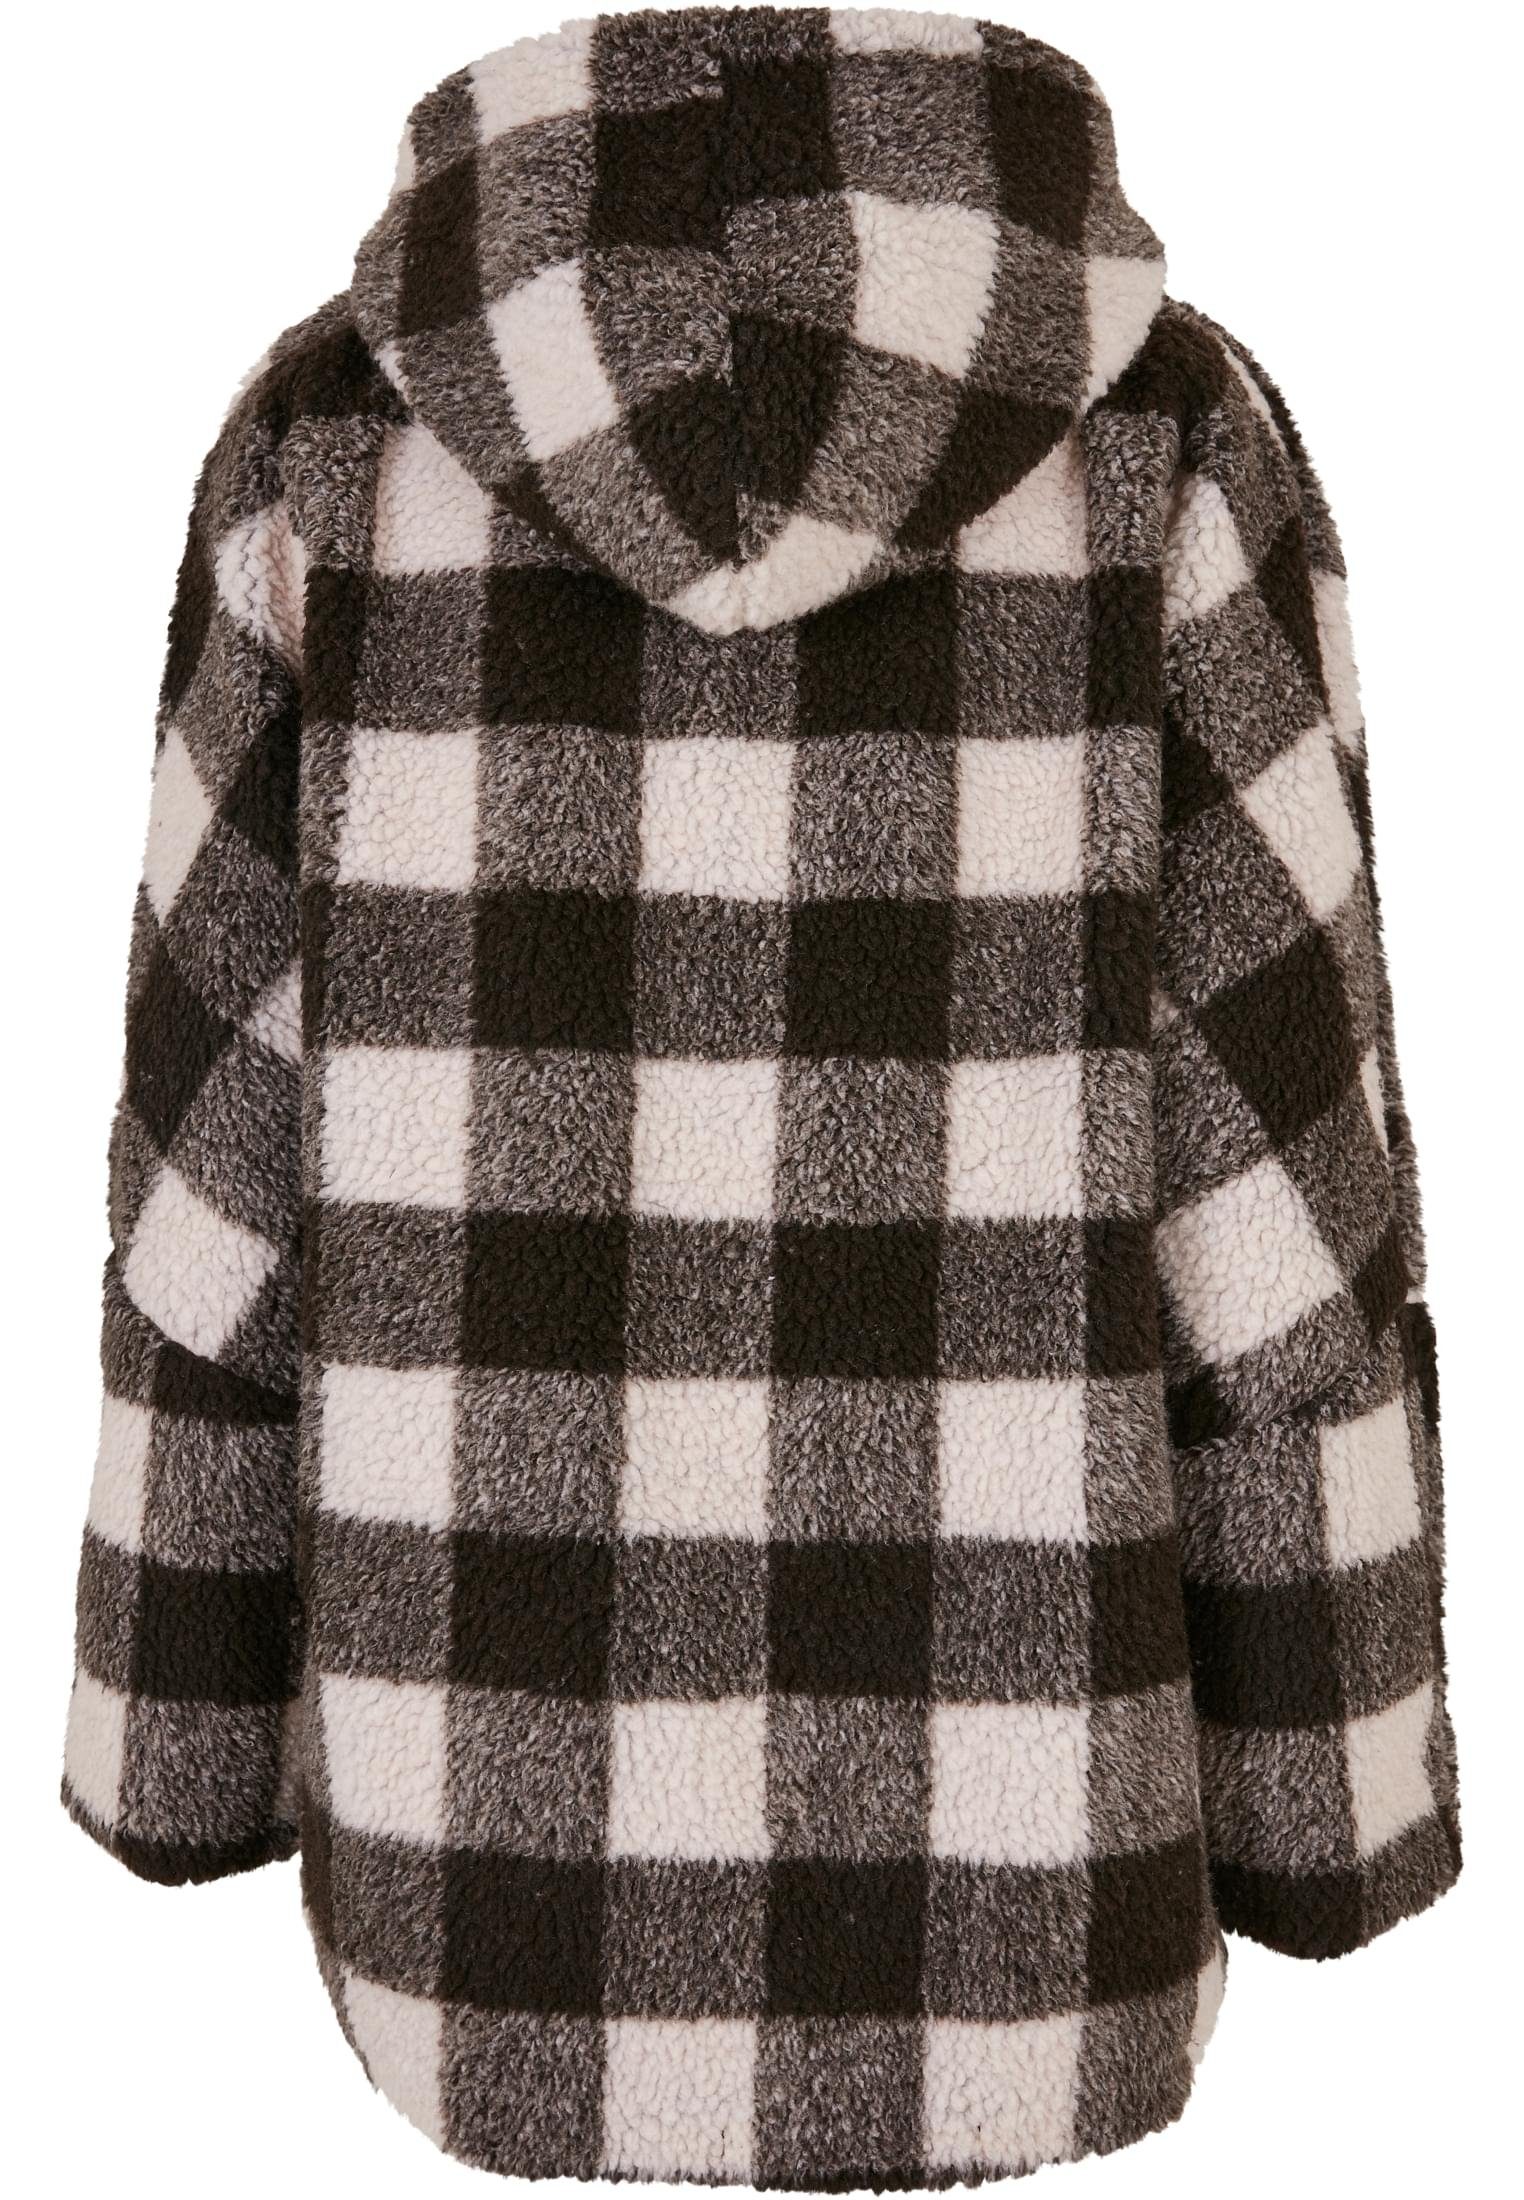 CLASSICS Damen Sherpa Jacket Ladies Winterjacke URBAN Check pink/brown Oversized (1-St) Hooded